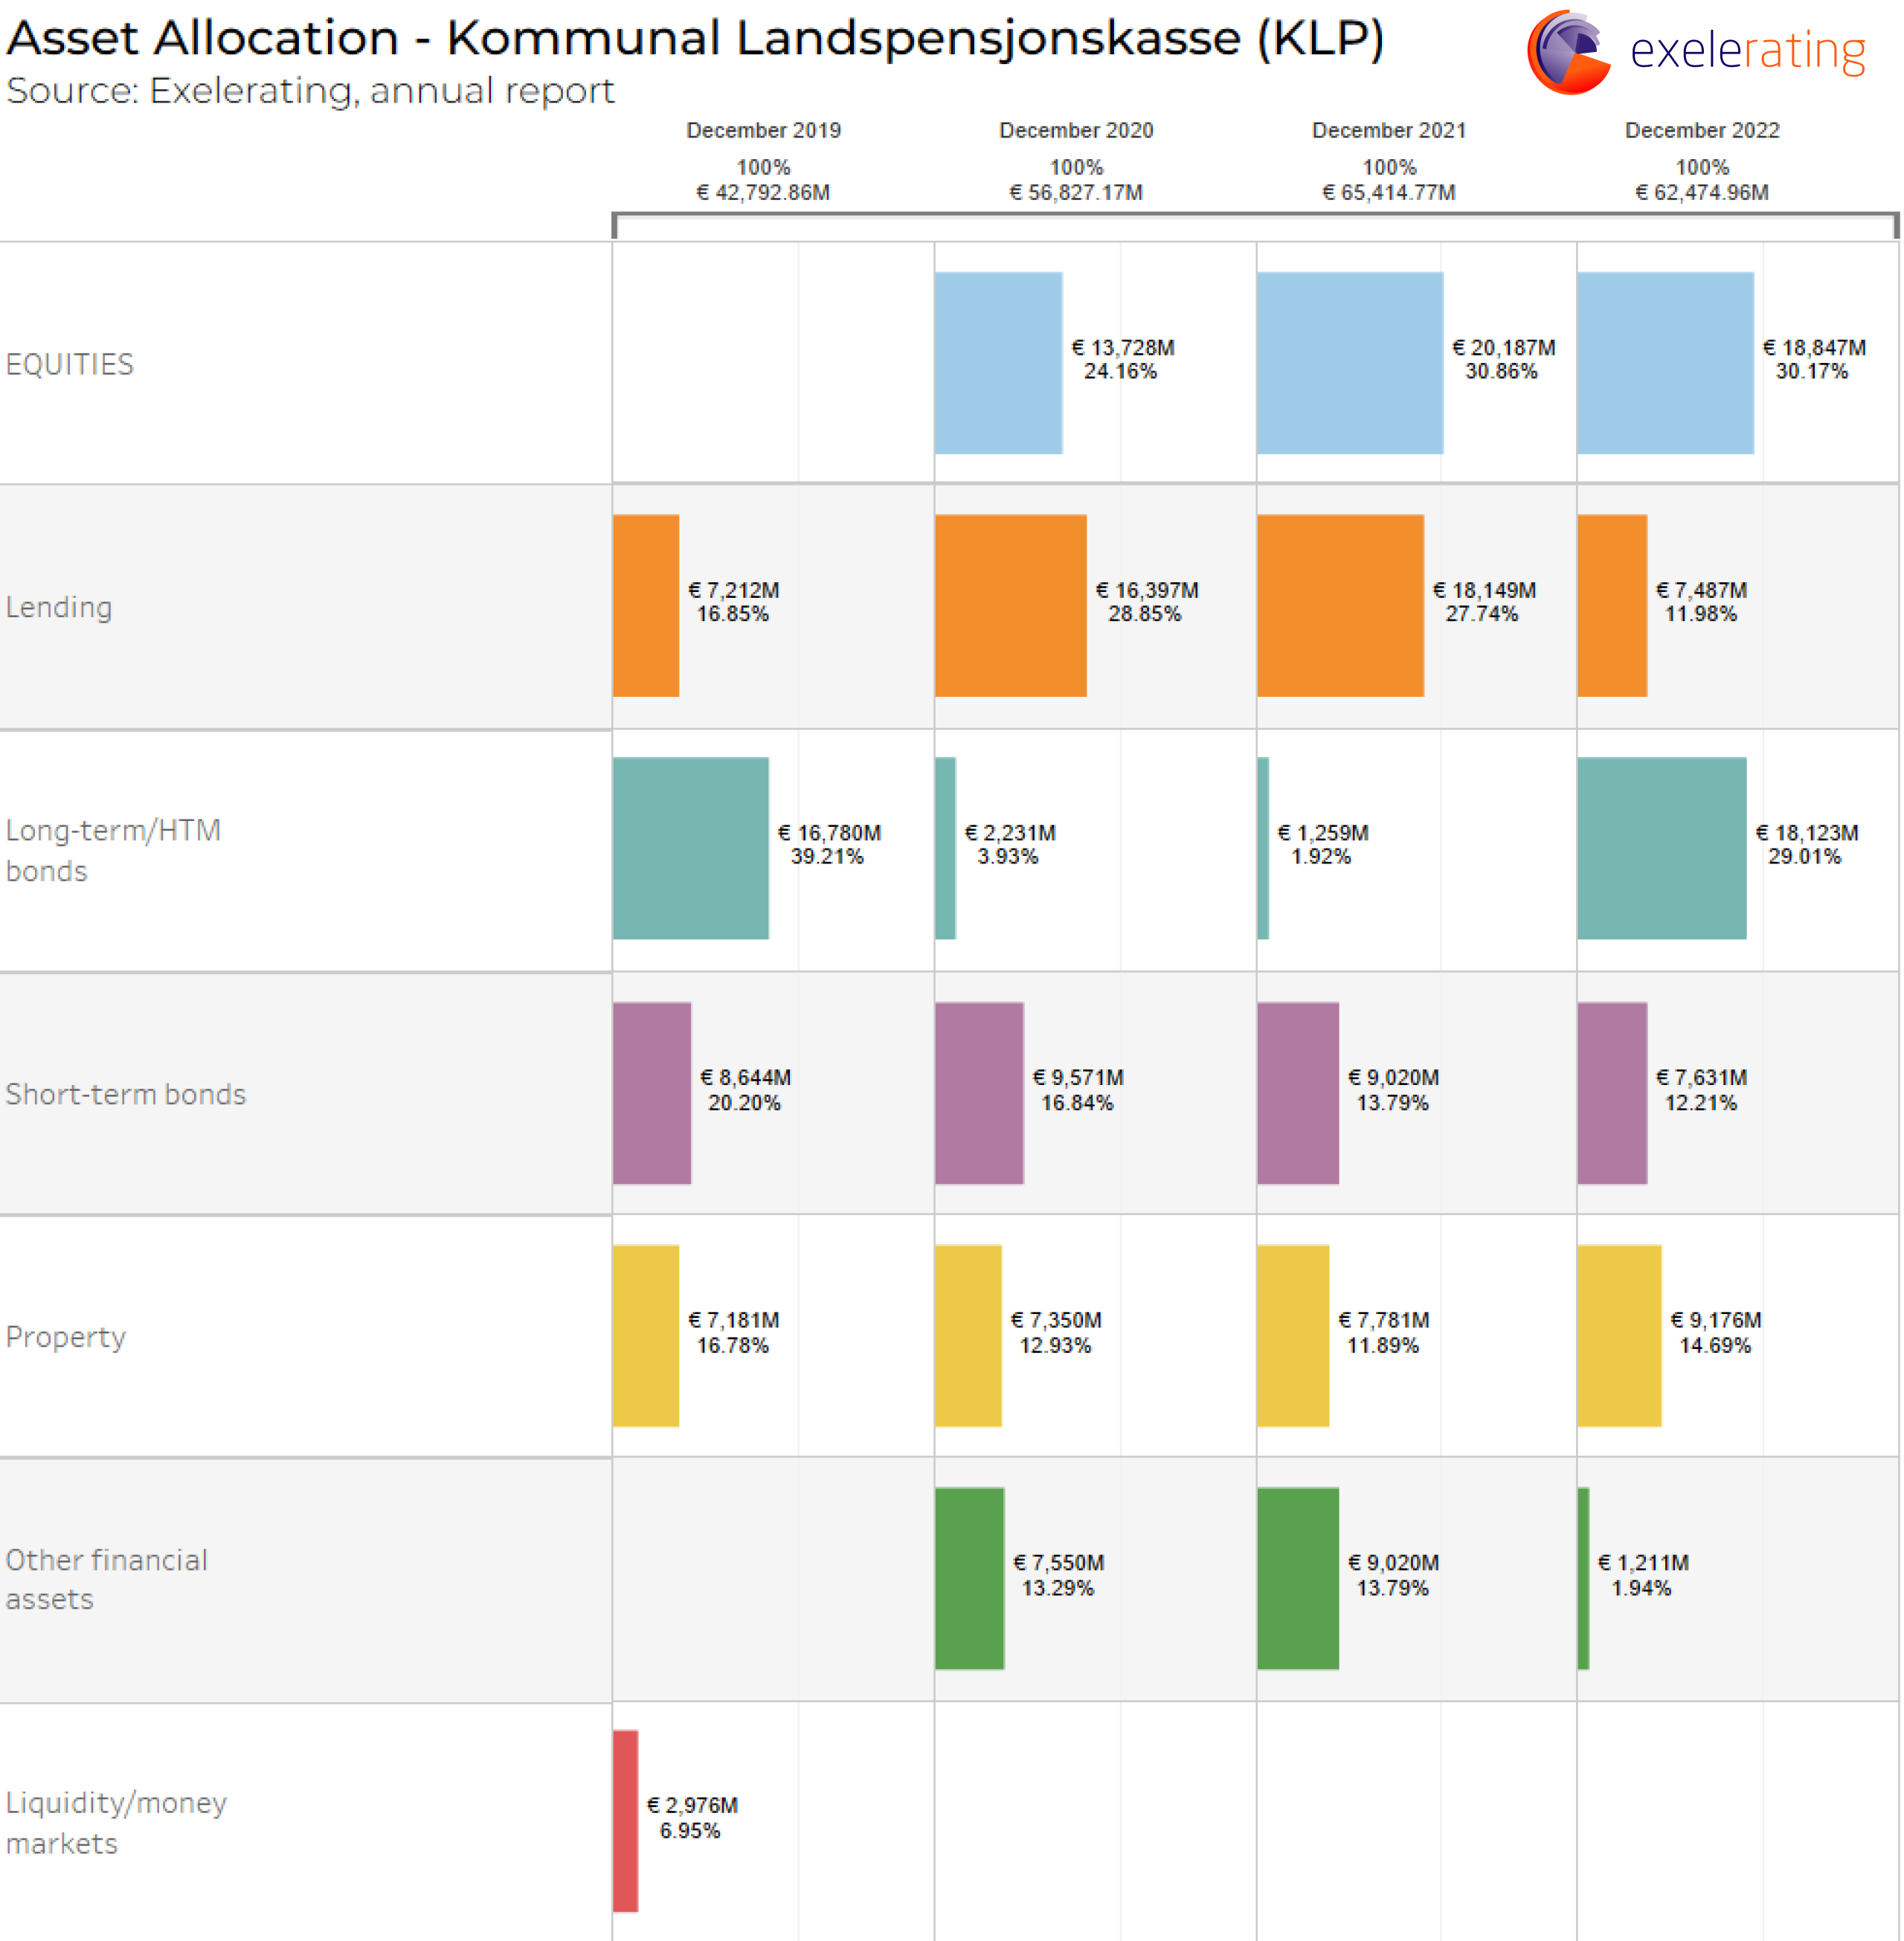 Breakdown of the asset allocation of the Kommunal Landspensjonskasse (KLP) in a horizontal bar chart.